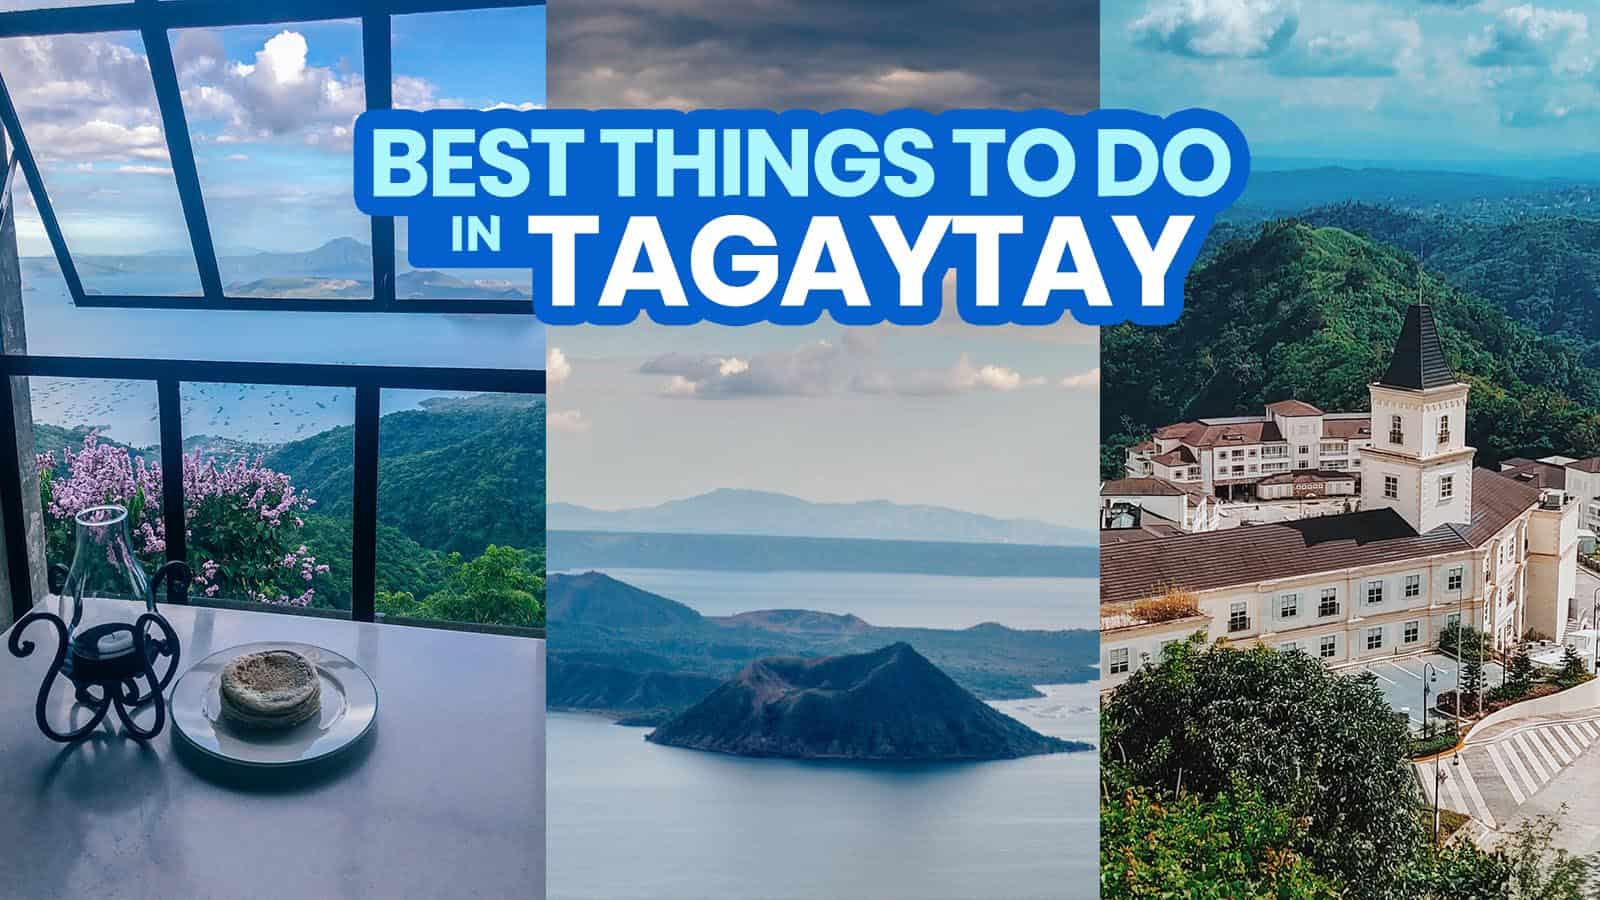 tagaytay tourist spot list